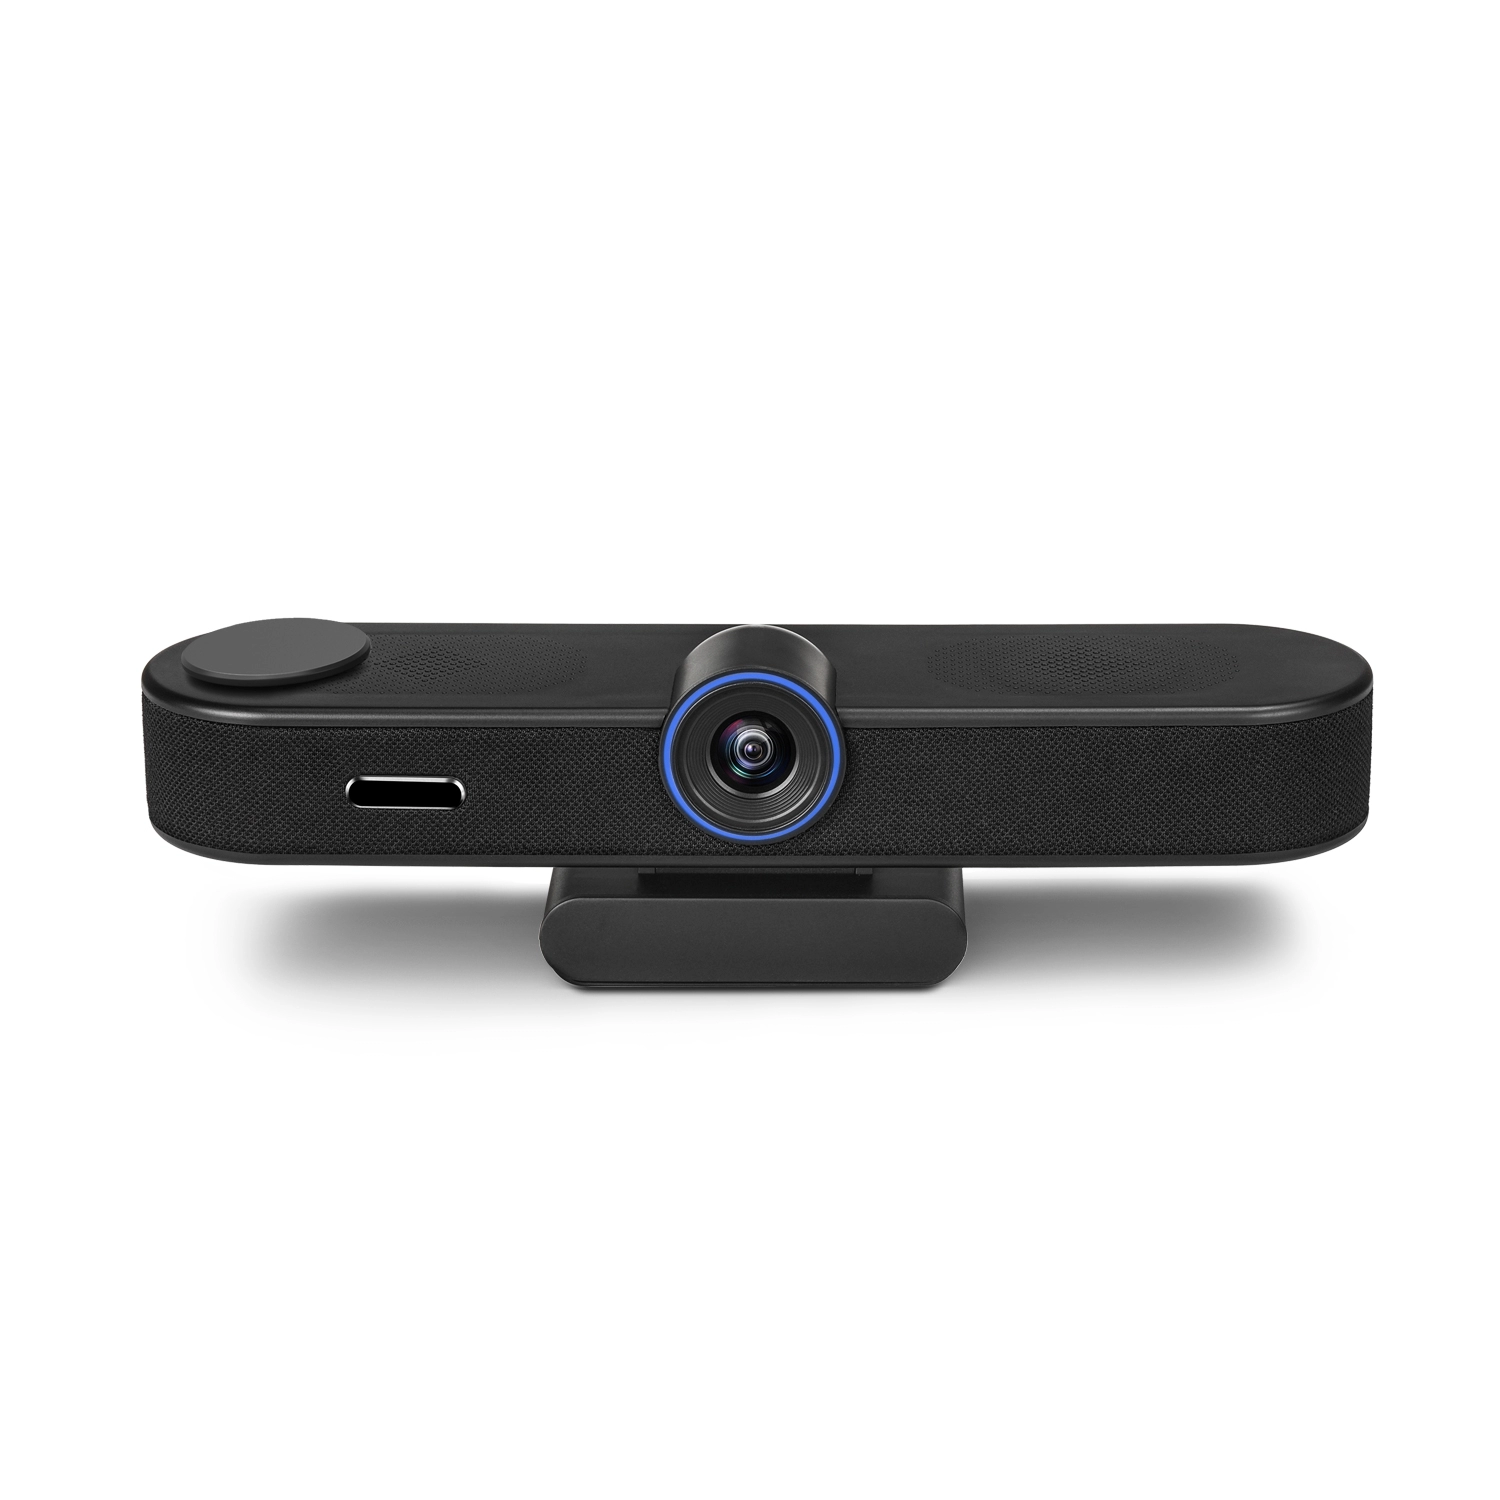 4K USB3.0 ePTZ Webcam with Auto-faming